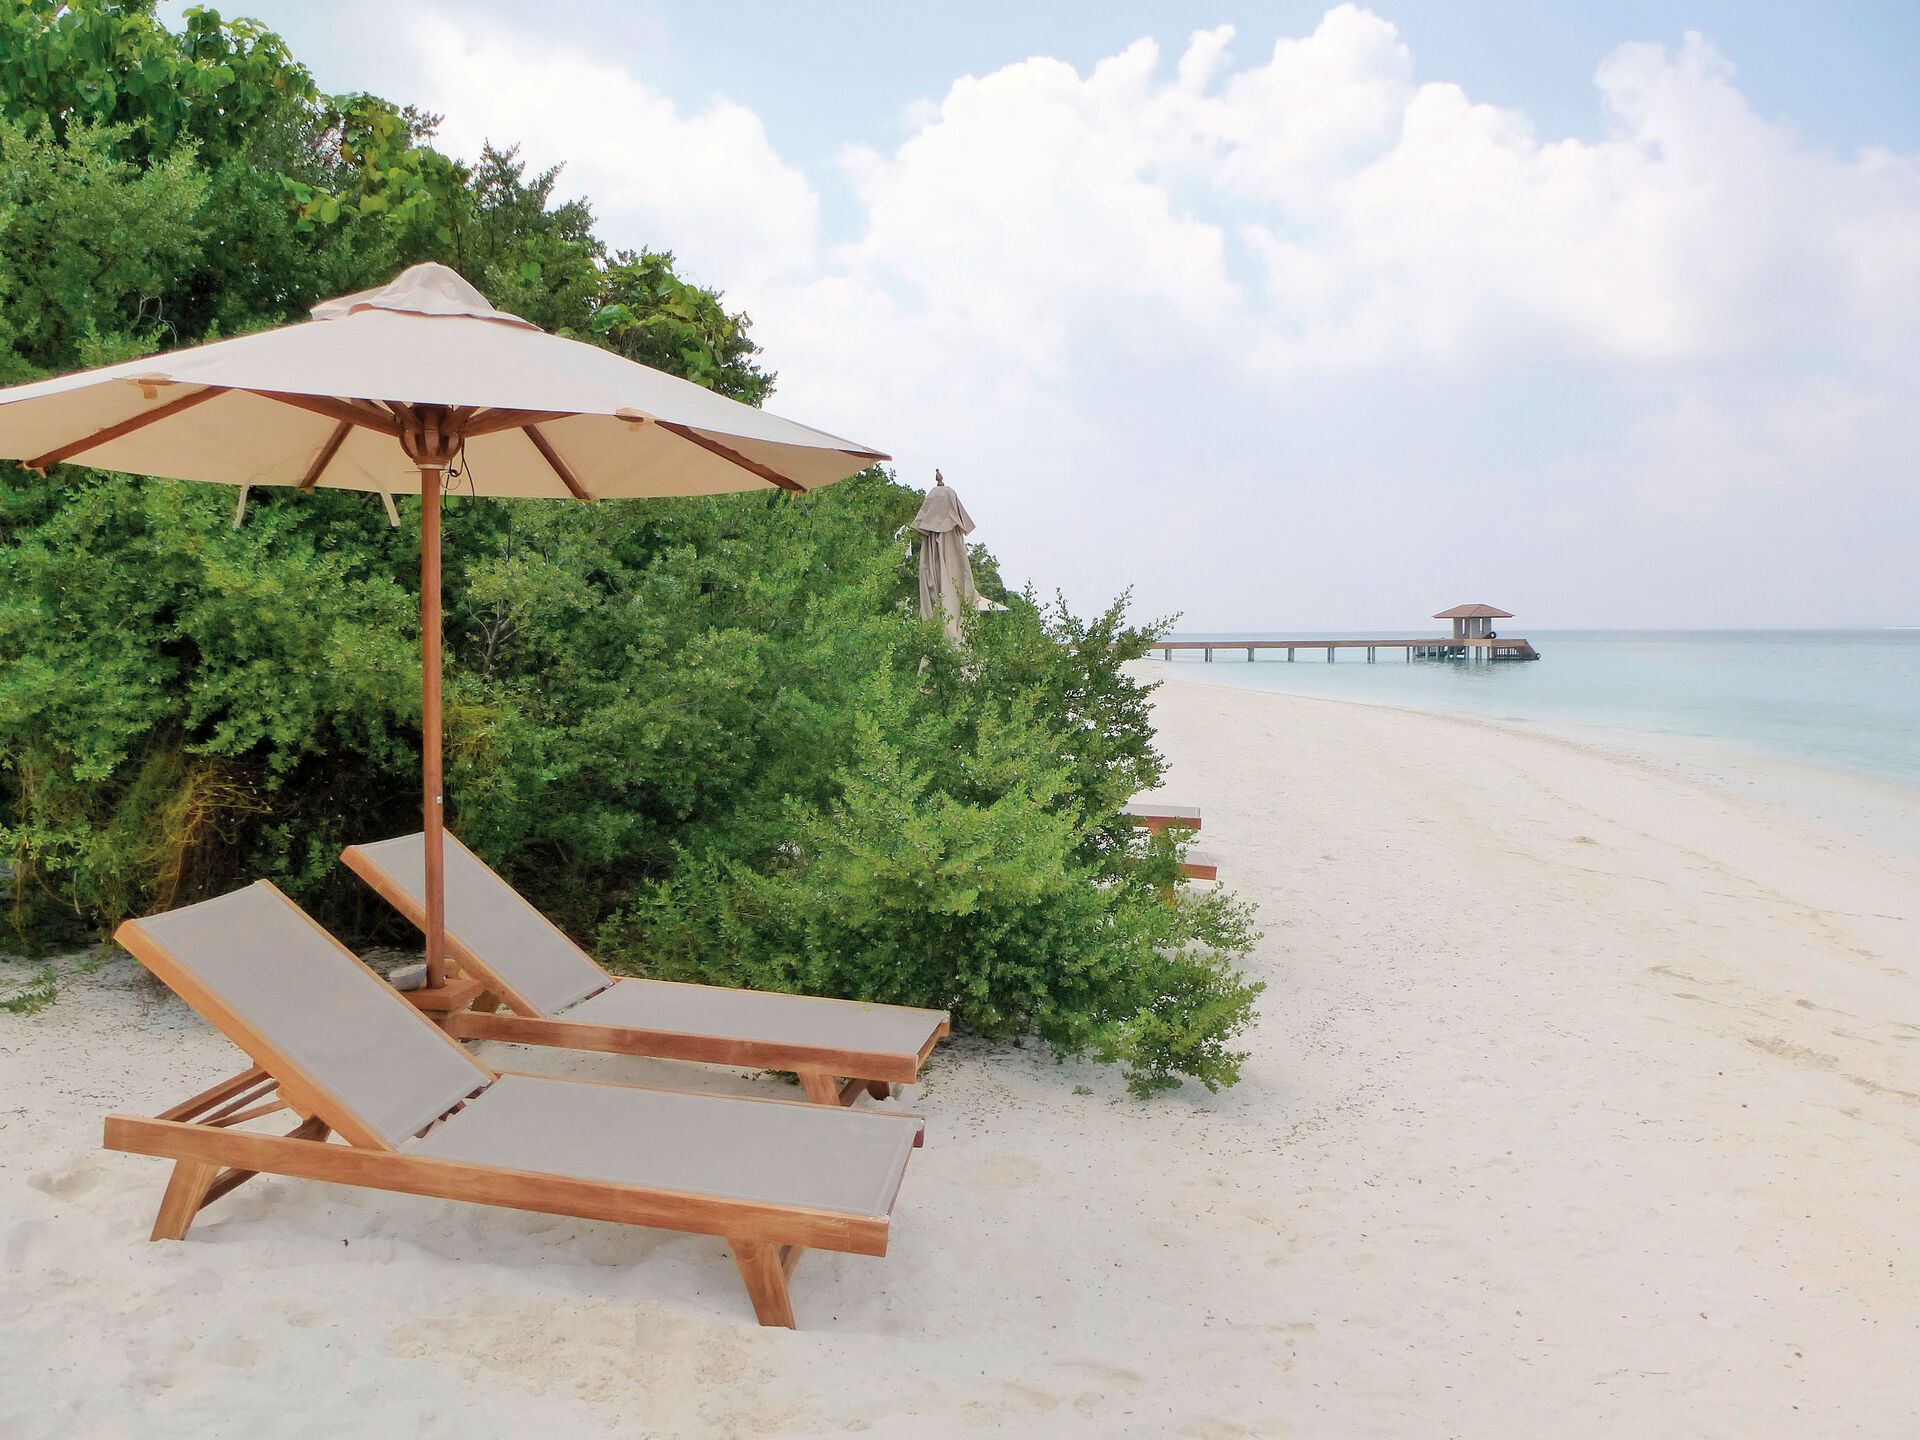 Maldives - The Barefoot Eco Hotel 4* - transfert inclus